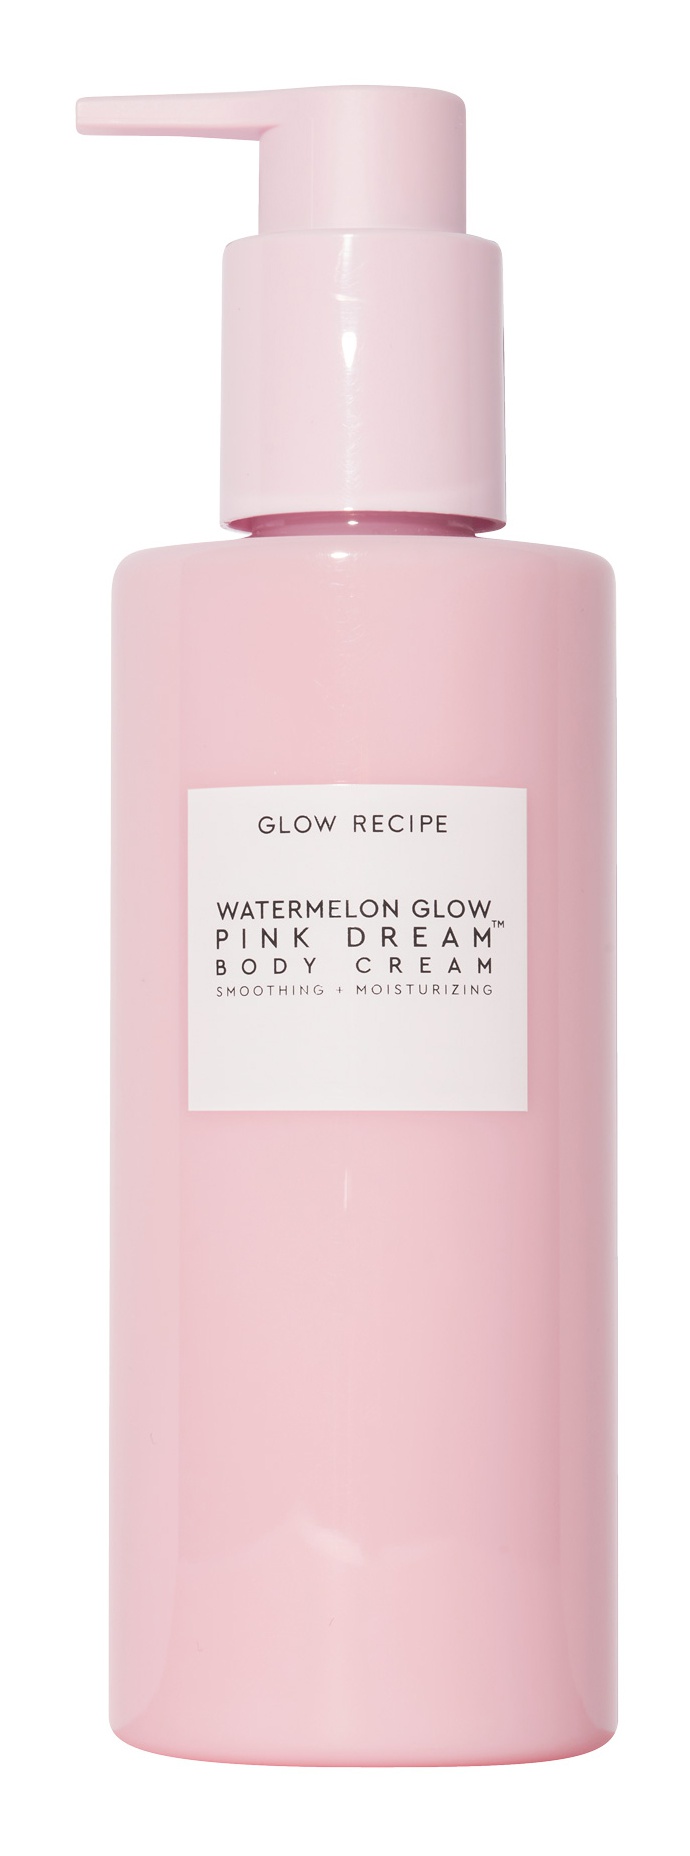 Glow Recipe Watermelon Glow AHA Pink Dream Body Cream